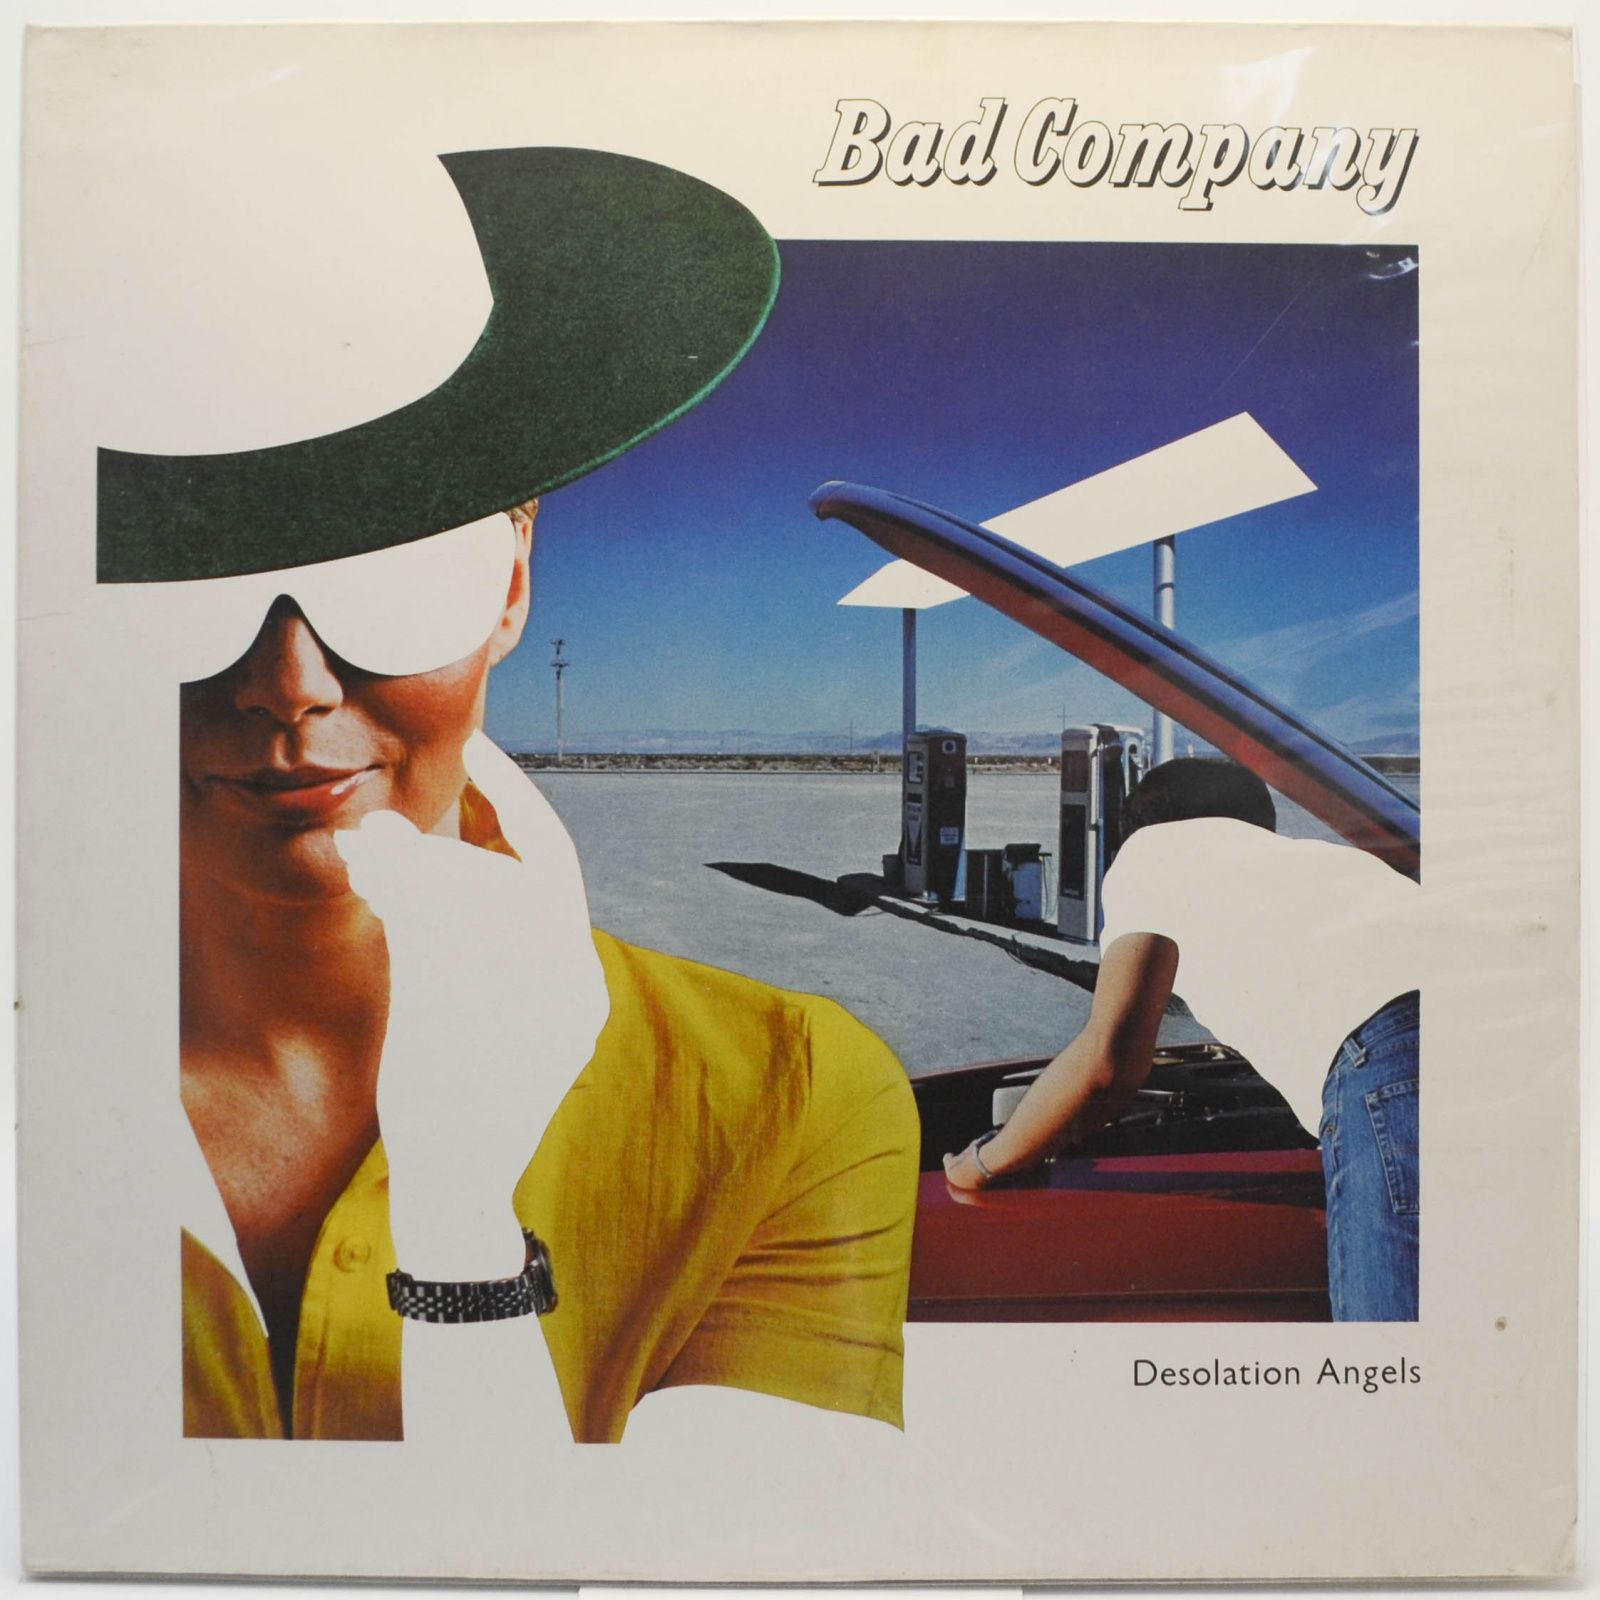 Bad Company — Desolation Angels, 1979